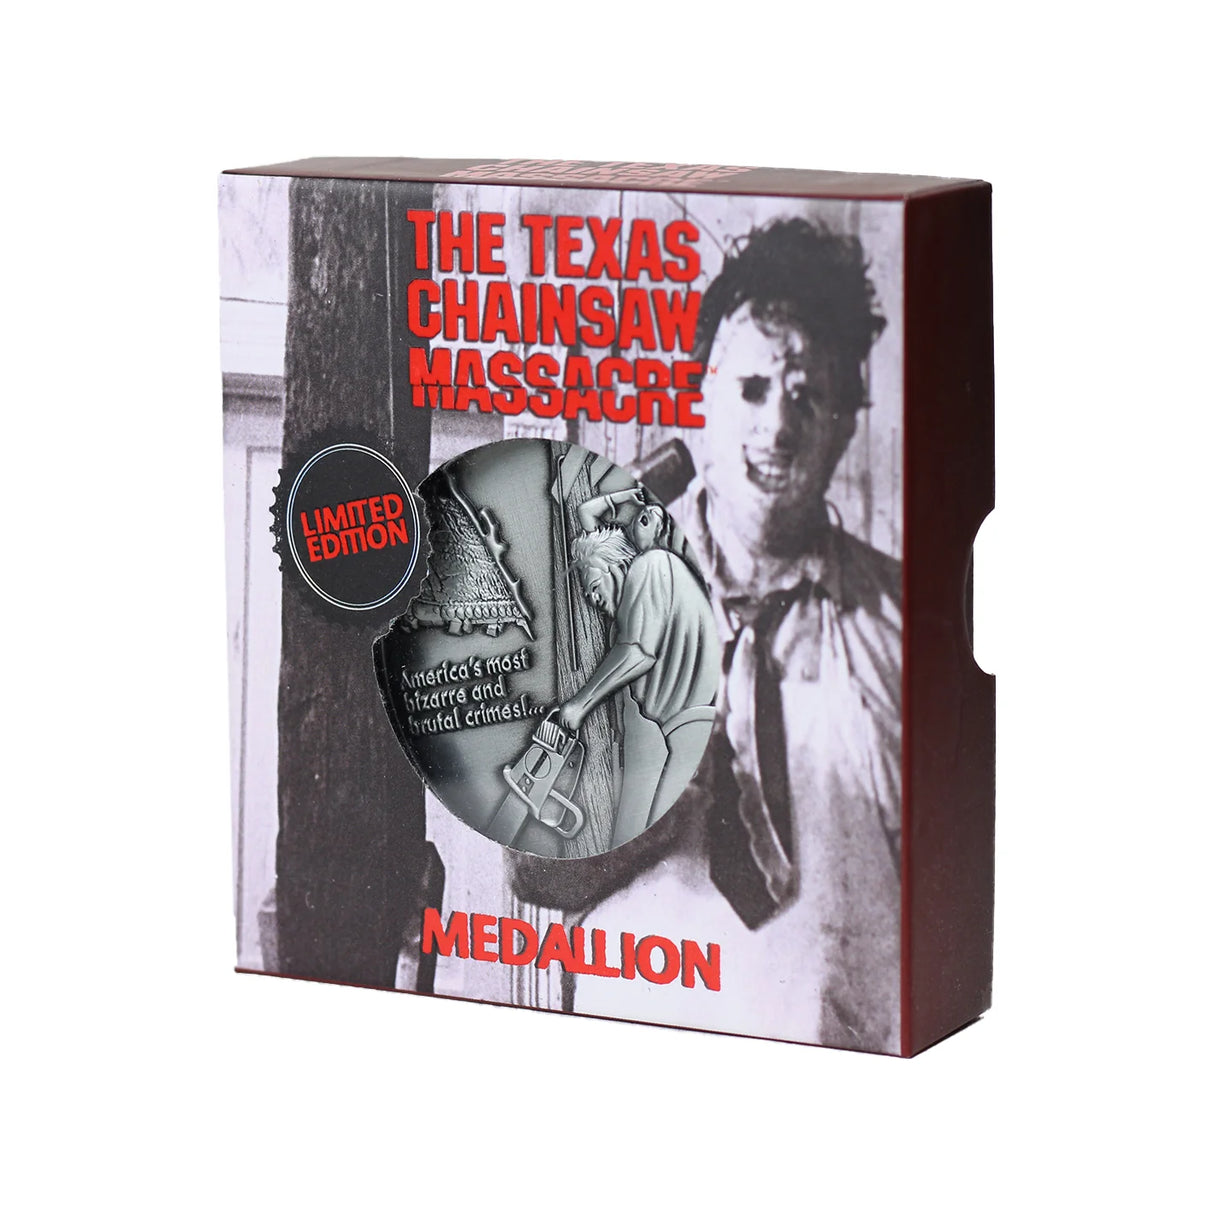 Texas Chainsaw Massacre Medallion